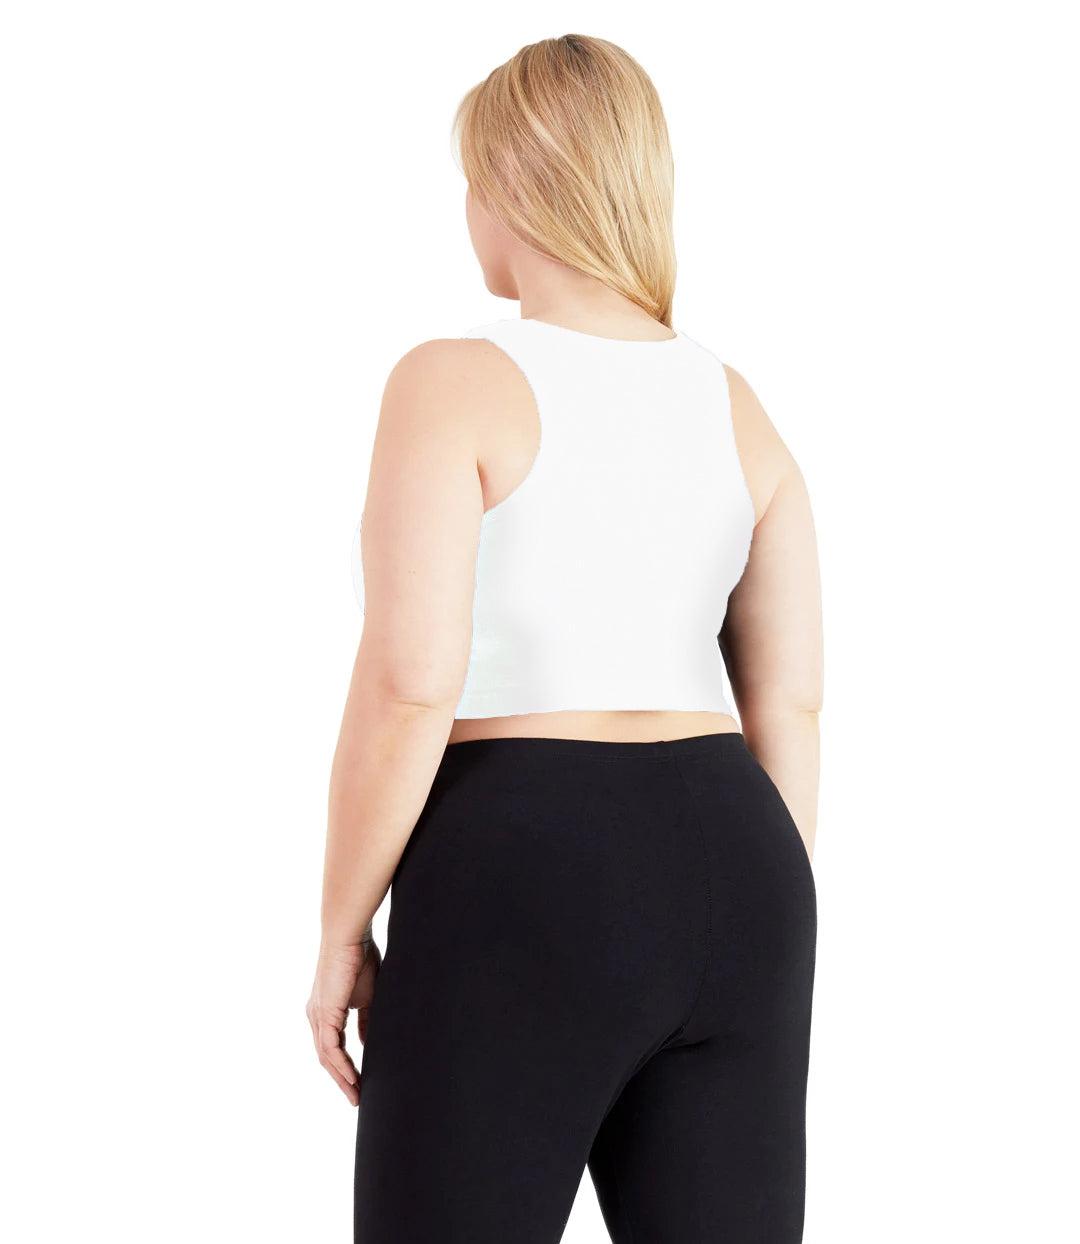 Plus size woman, facing back, wearing JunoActive plus size UltraKnit V-Neck Bras in White. The woman is wearing a pair of Black JunoActive leggings.